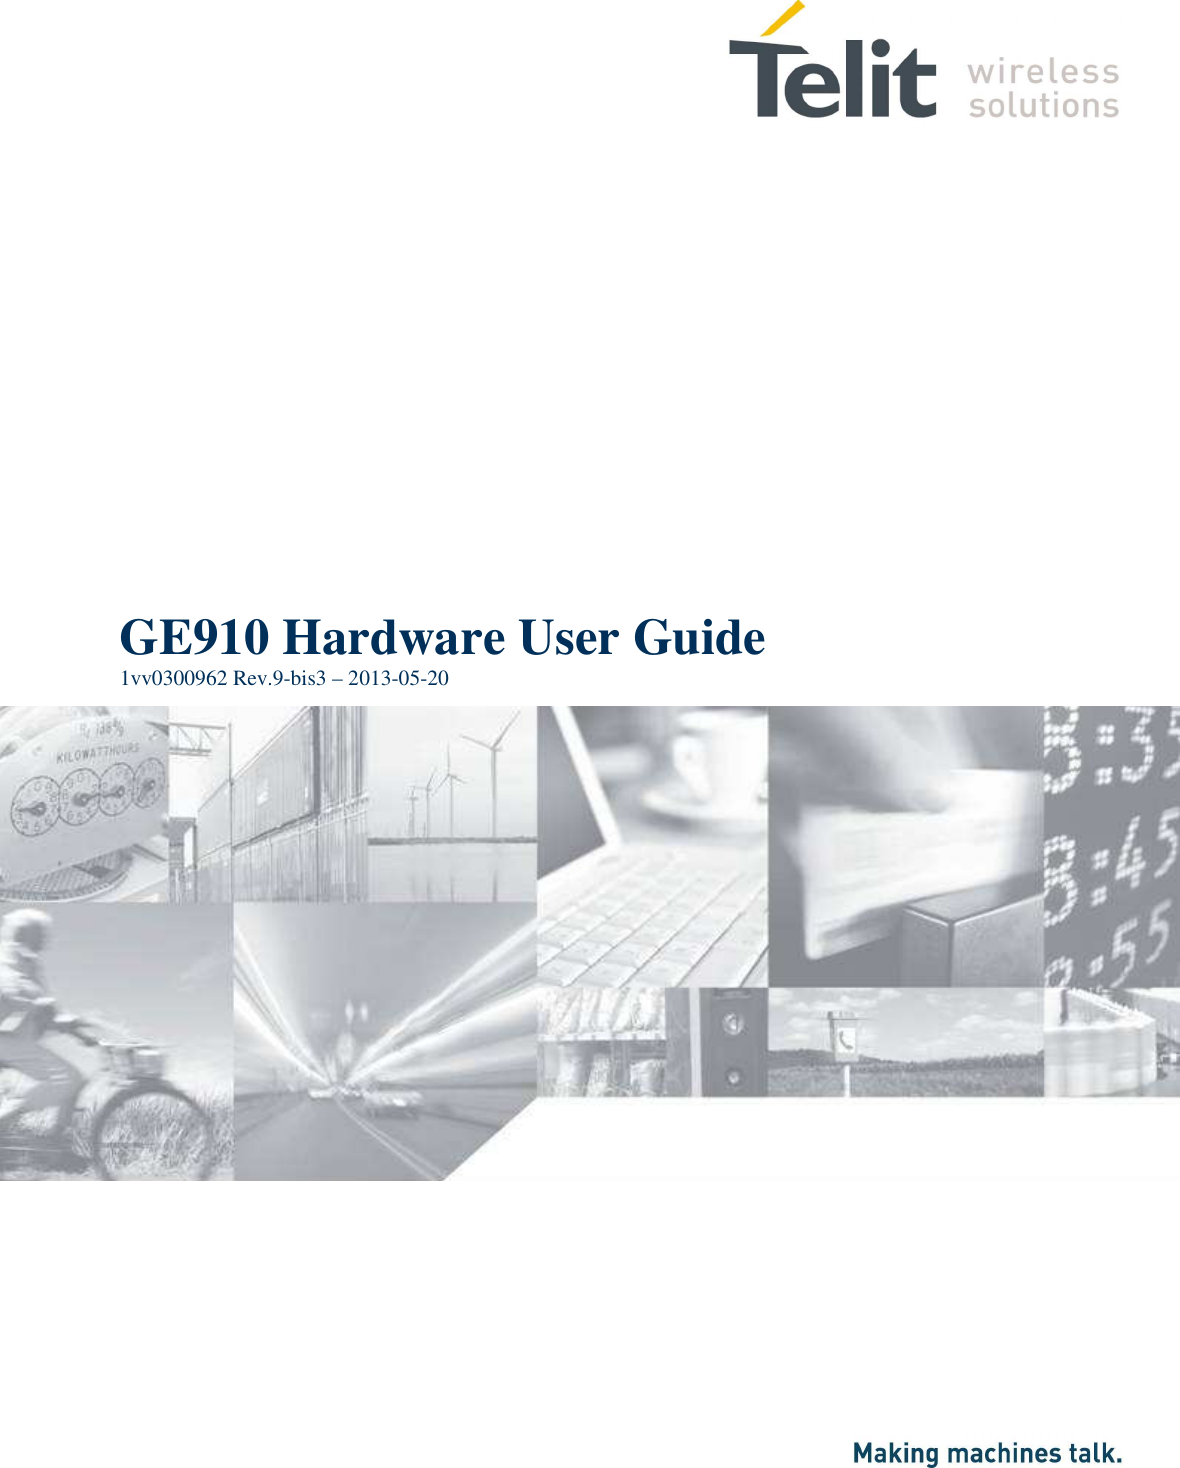                                                       GE910 Hardware User Guide 1vv0300962 Rev.9-bis3 – 2013-05-20  